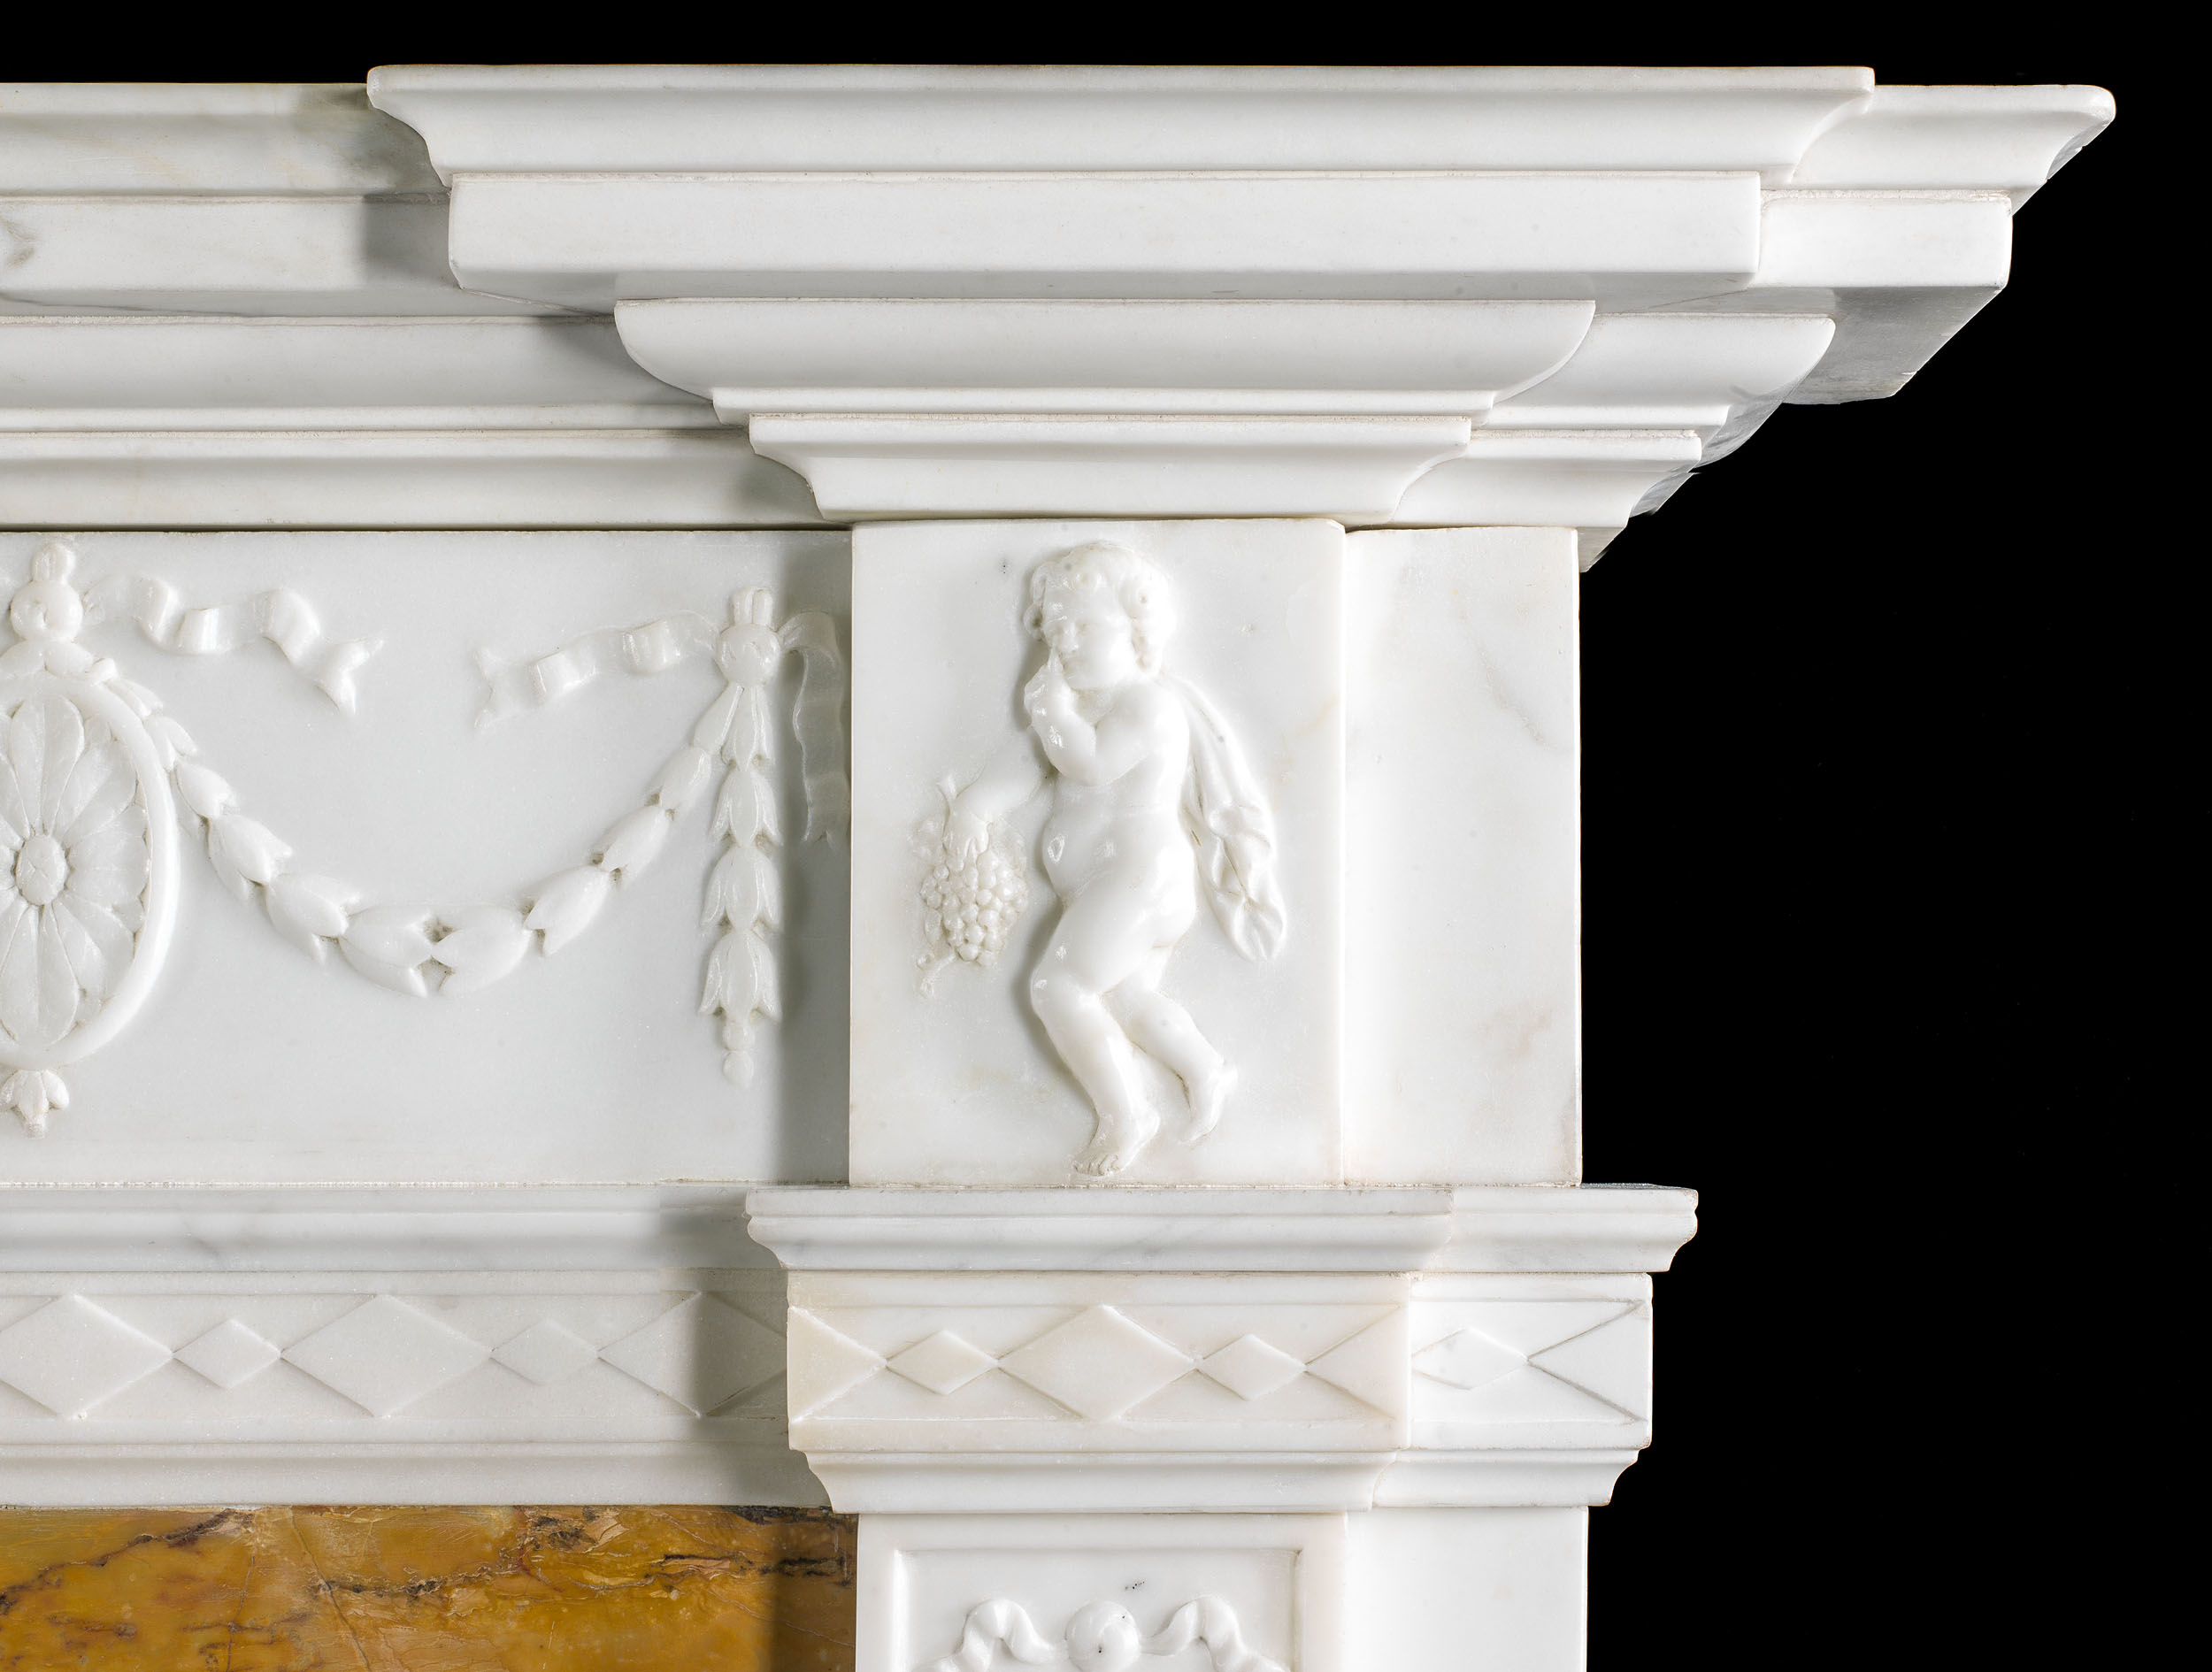 A Statuary Marble Georgian Style Fireplace
